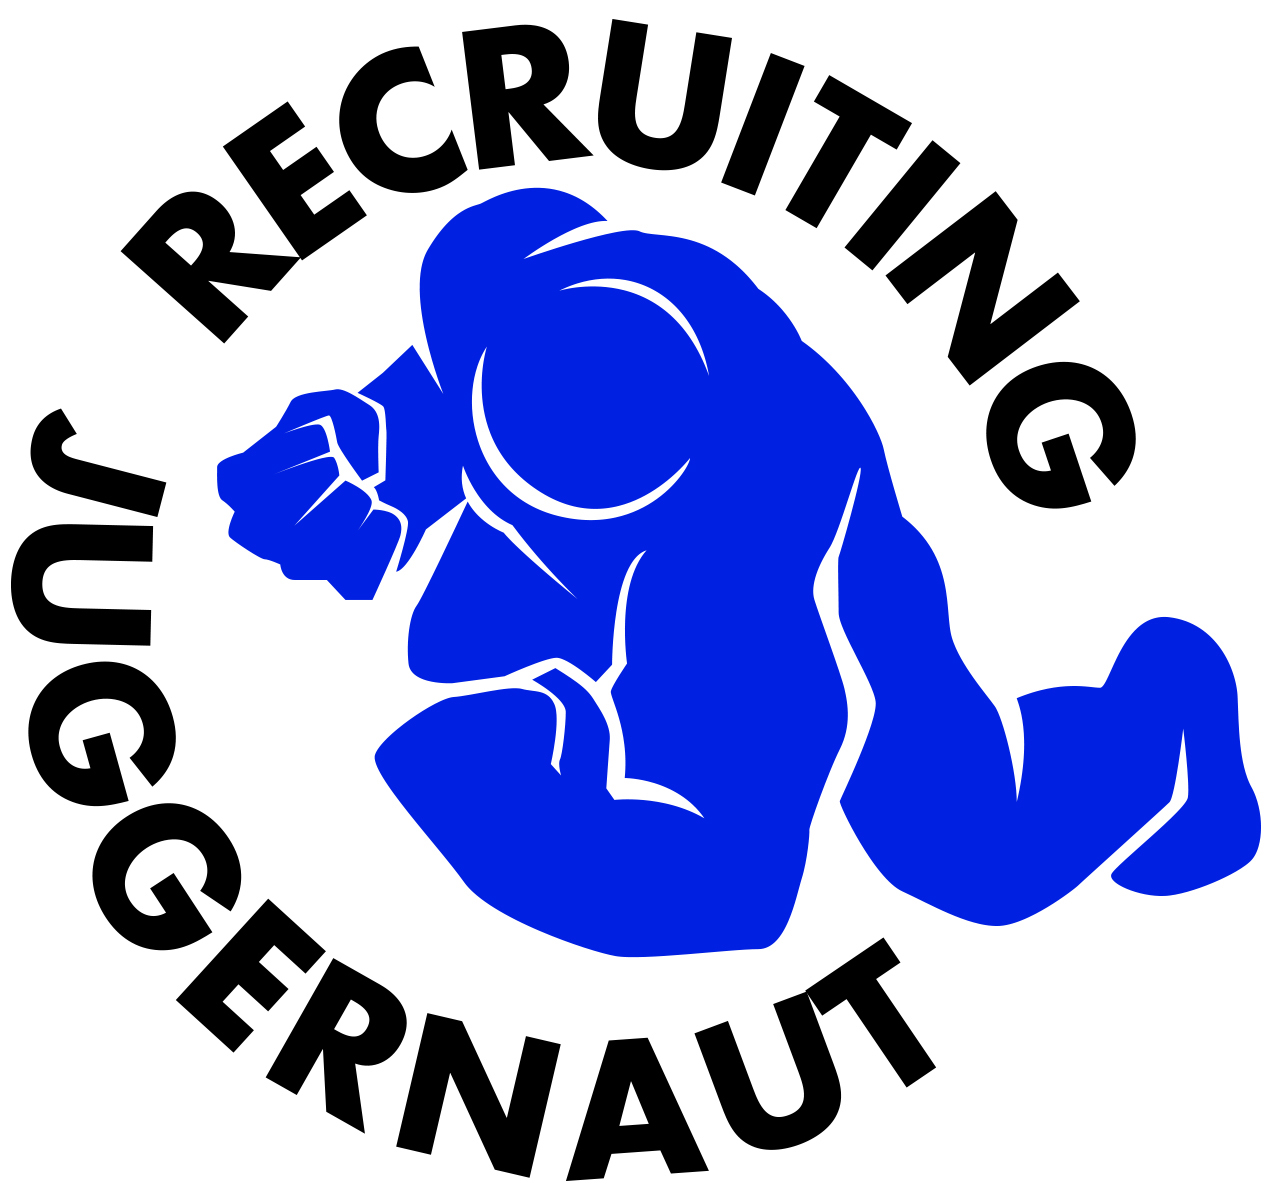 Recruiting Juggernaut